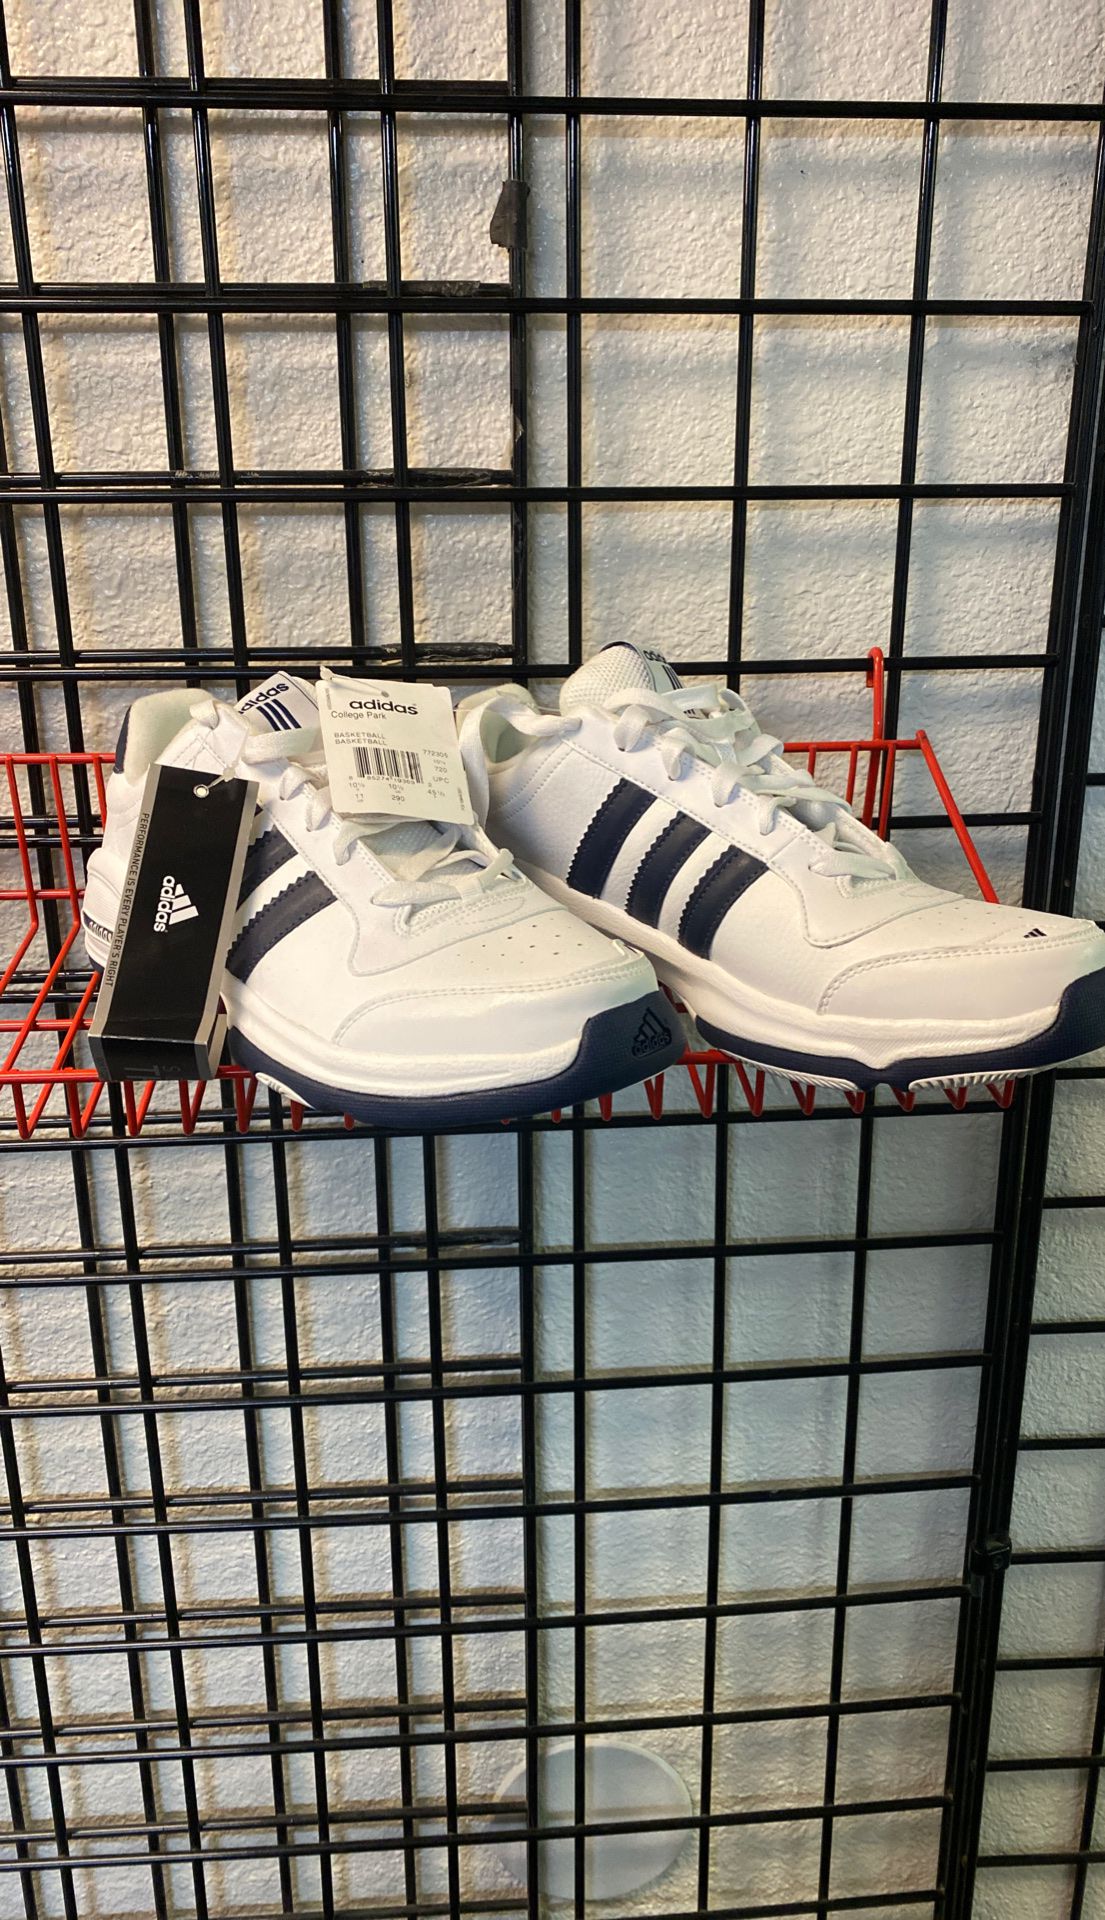 Adidas Basketball Shoes size 11